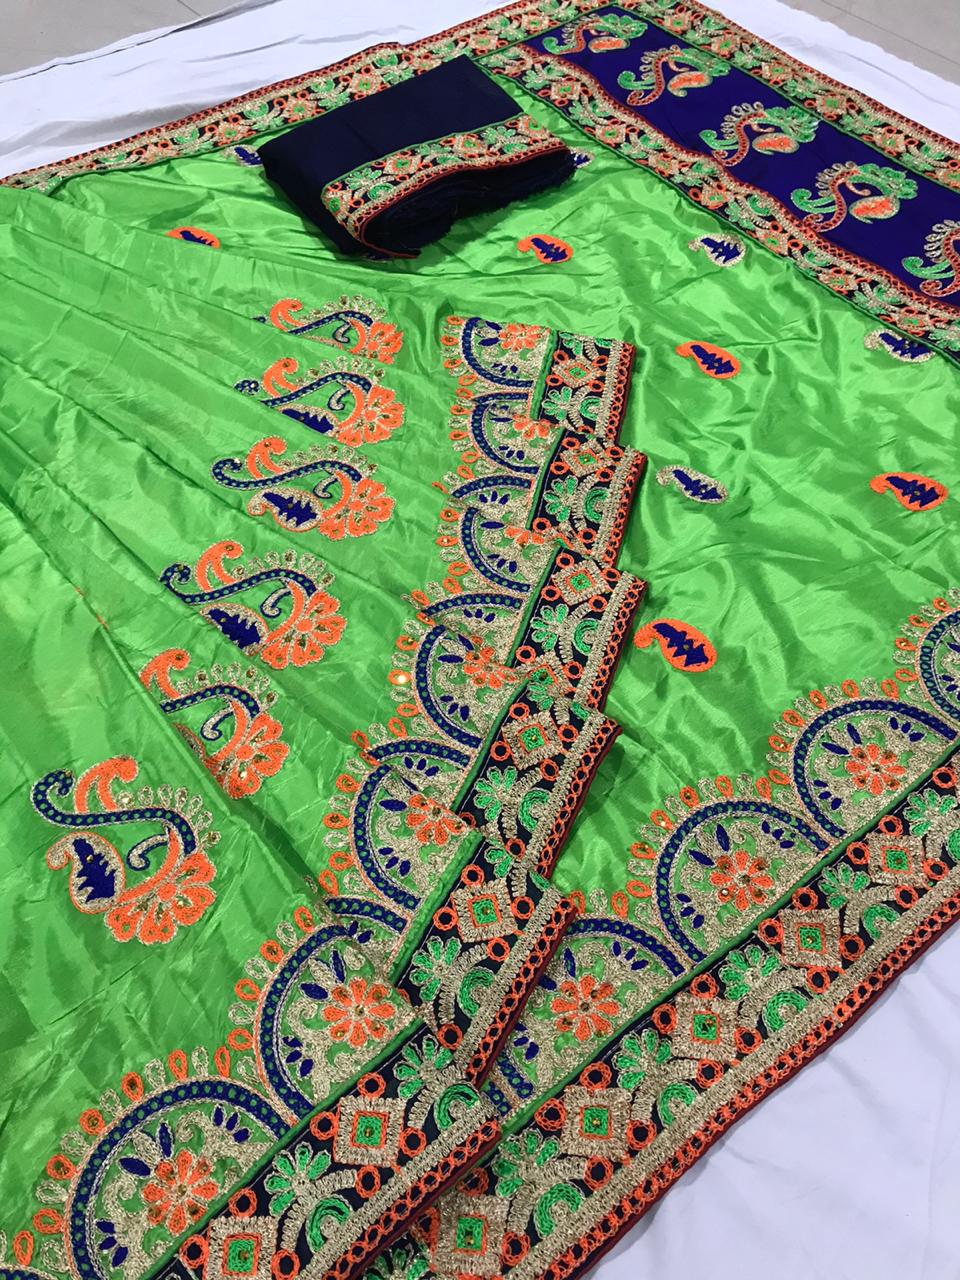 Gorgeous Green Silk With Embroidered Work Designer Saree